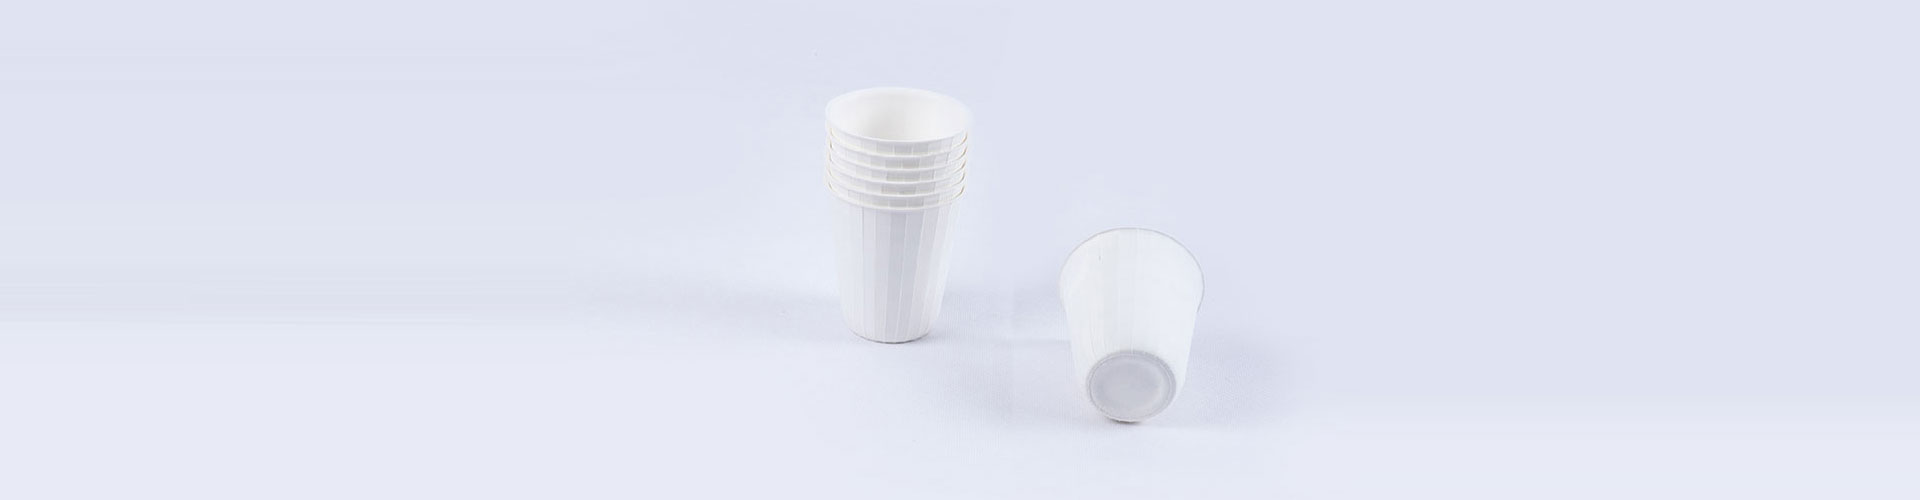 https://www.zhibeneco.com/uploads/image/20201009/11/eco-friendly-cup.jpg